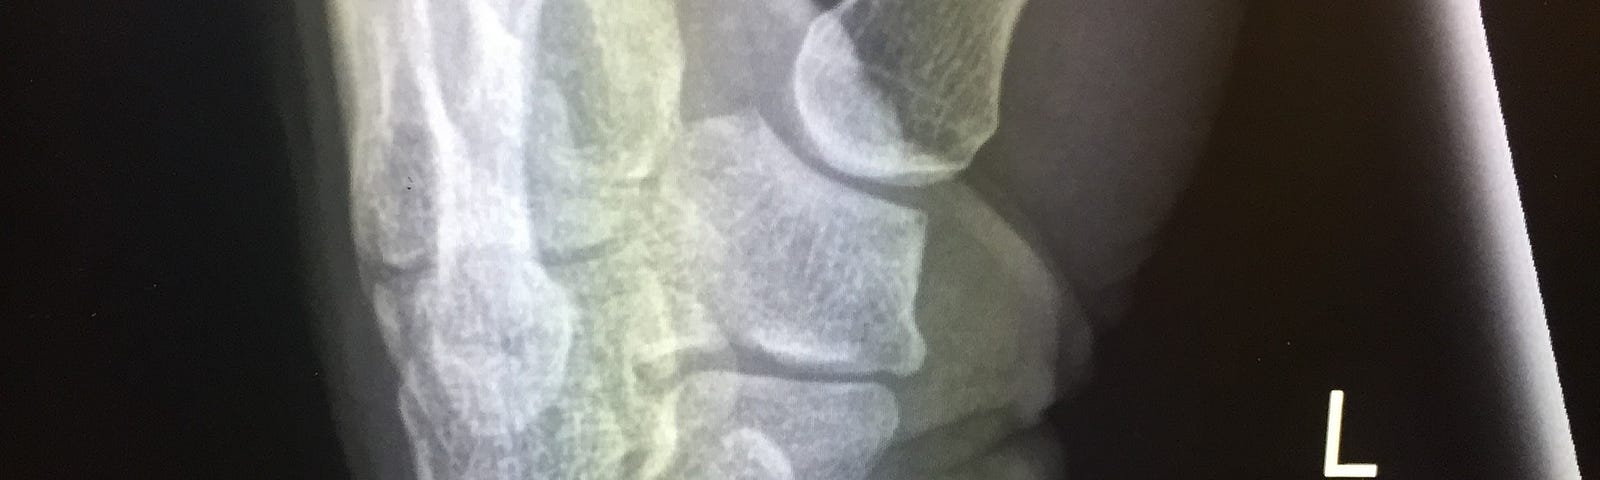 X-ray of a broken wrist